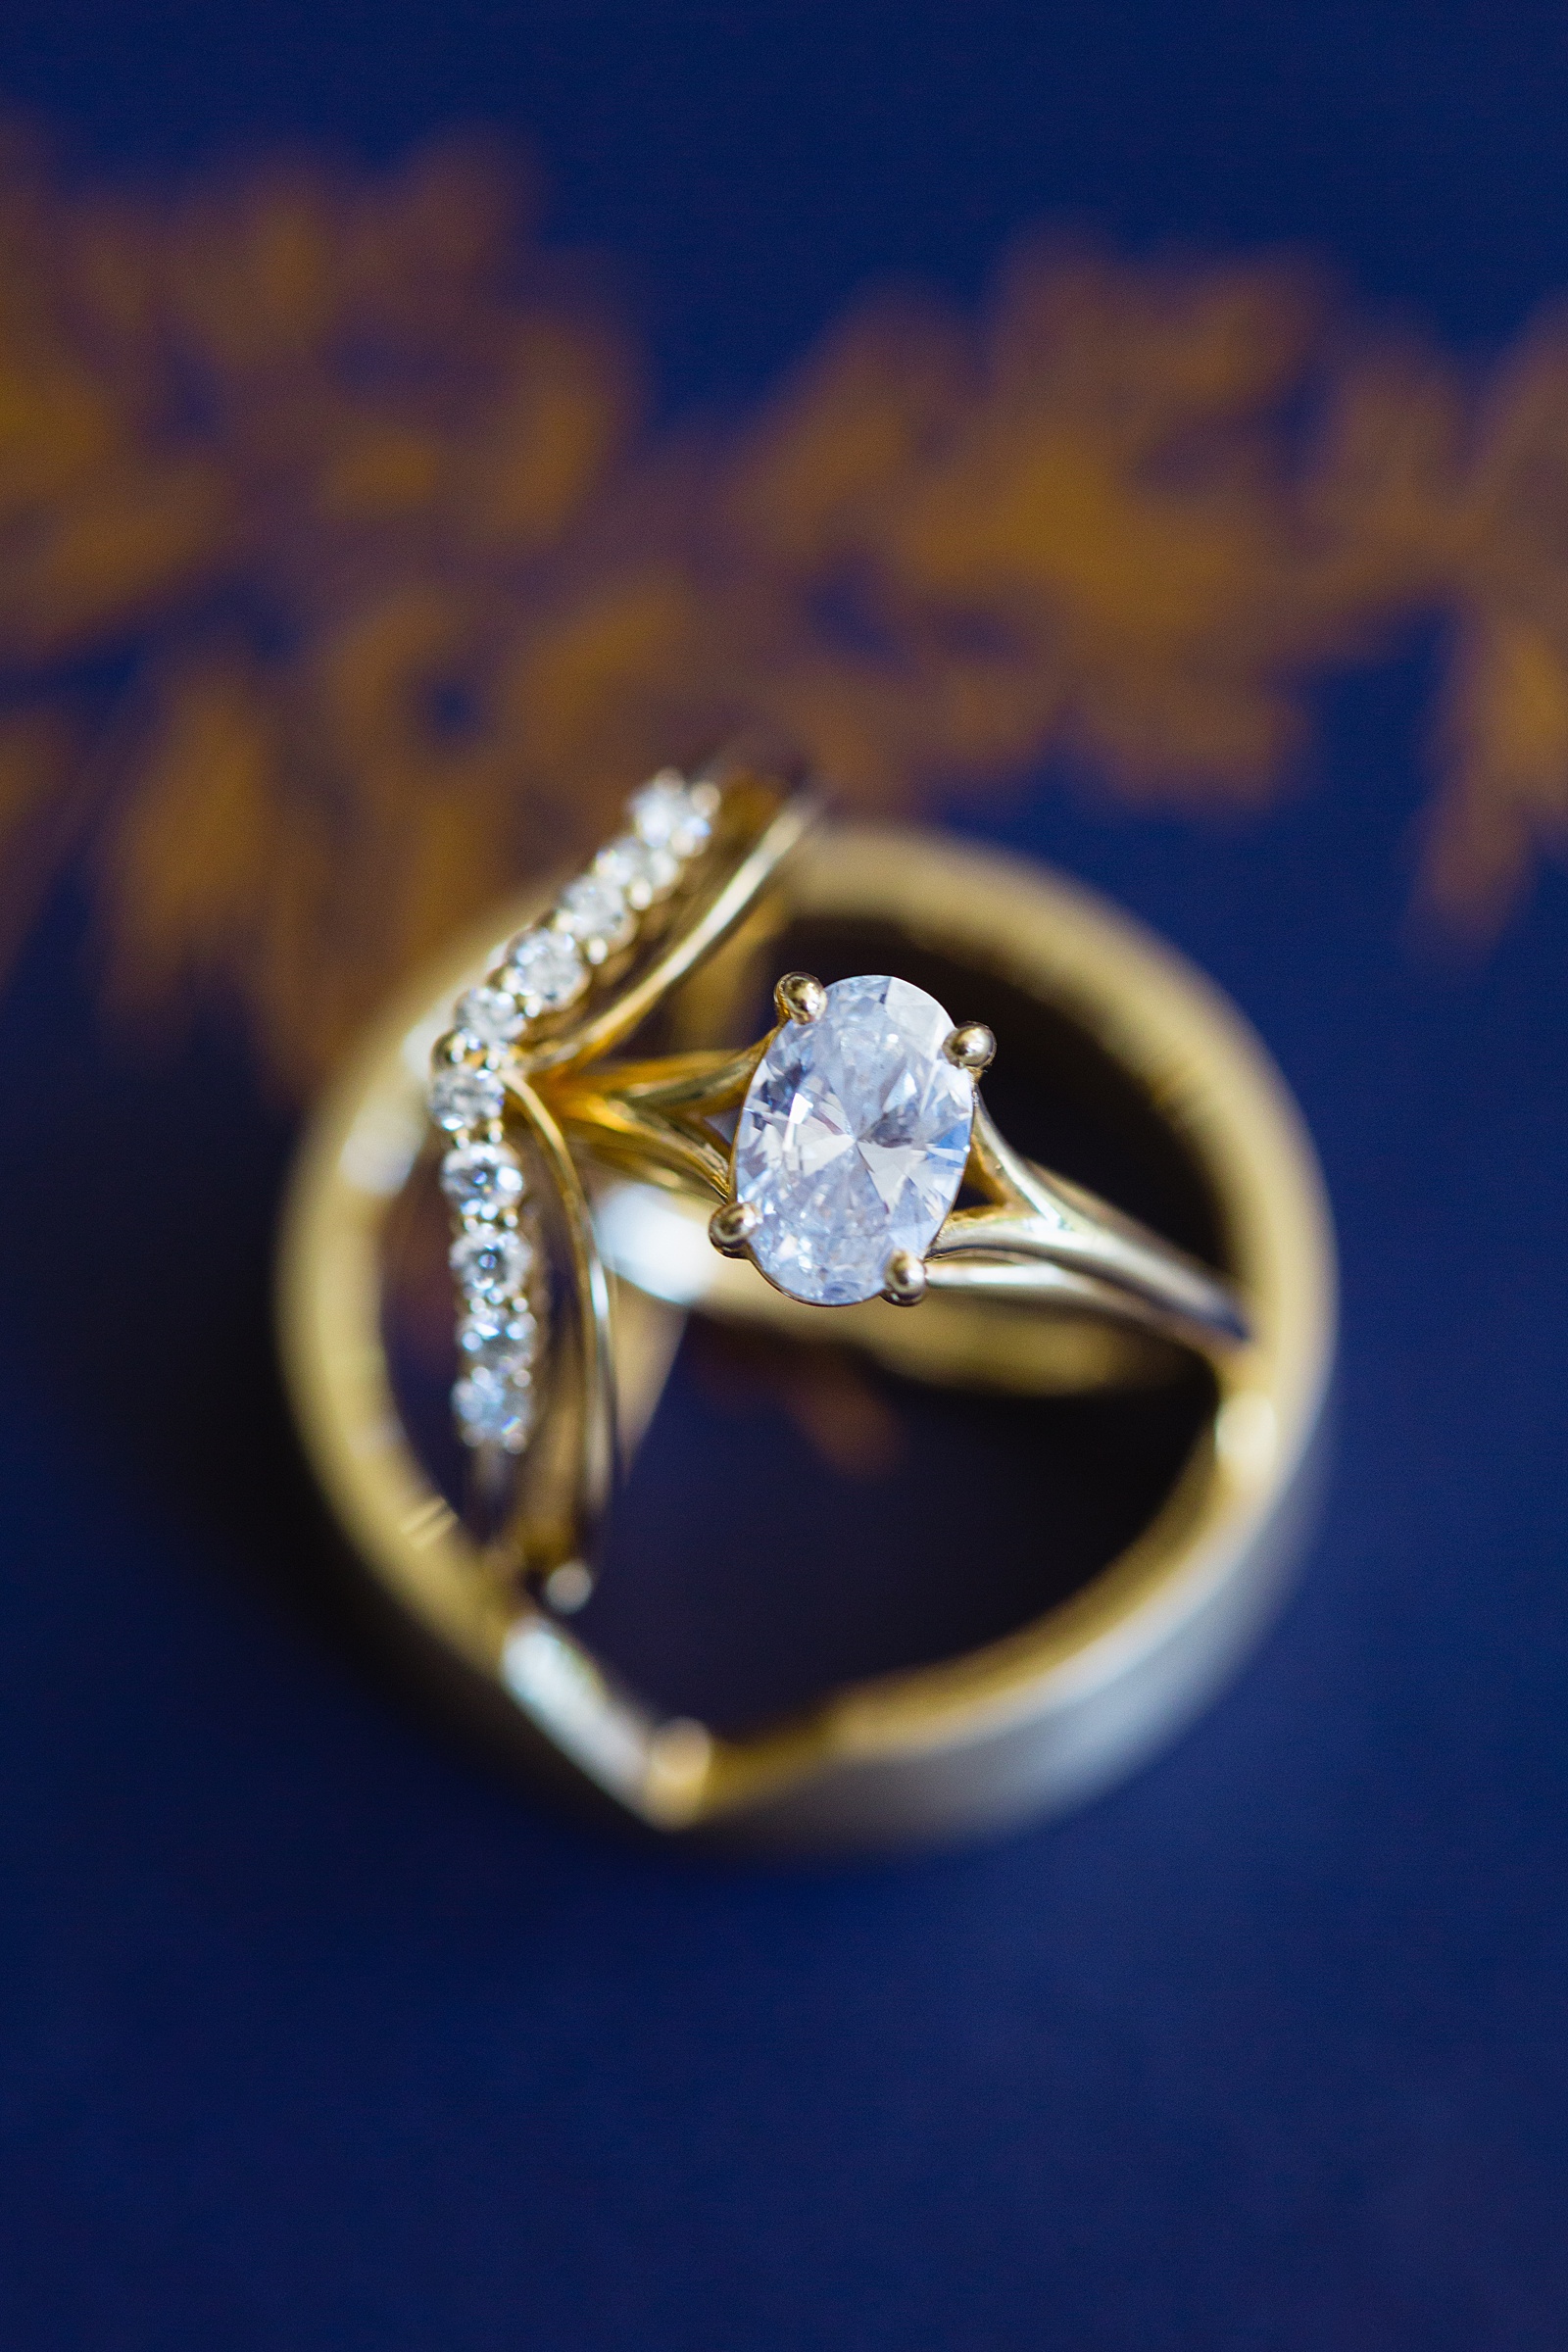 Custom gold and diamond wedding rings on navy and copper wedding stationary by Arizona wedding photographer PMA Photography.